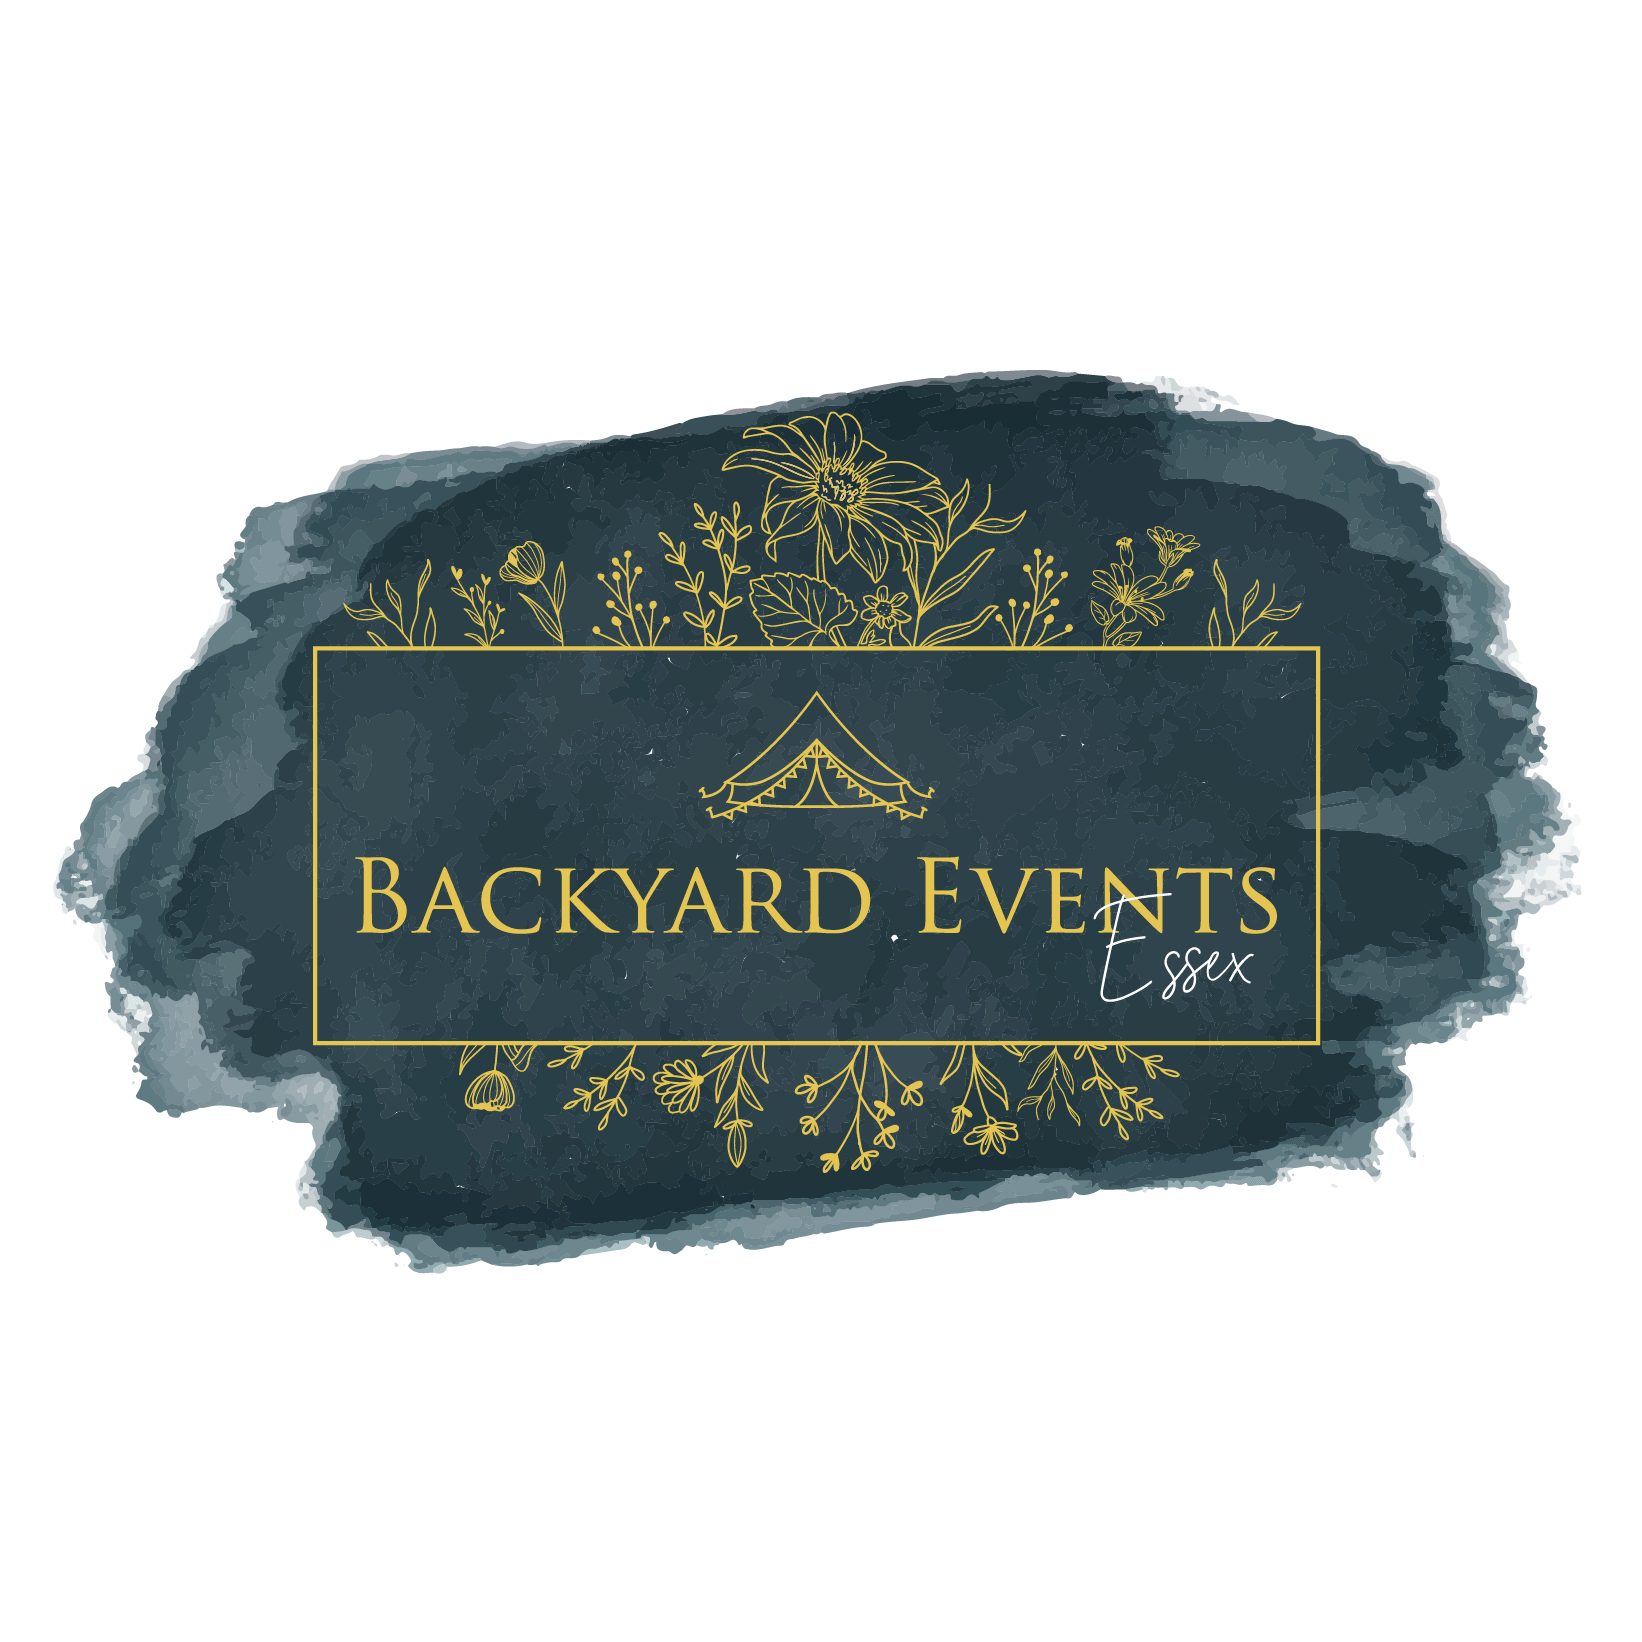 Backyard Events Essex